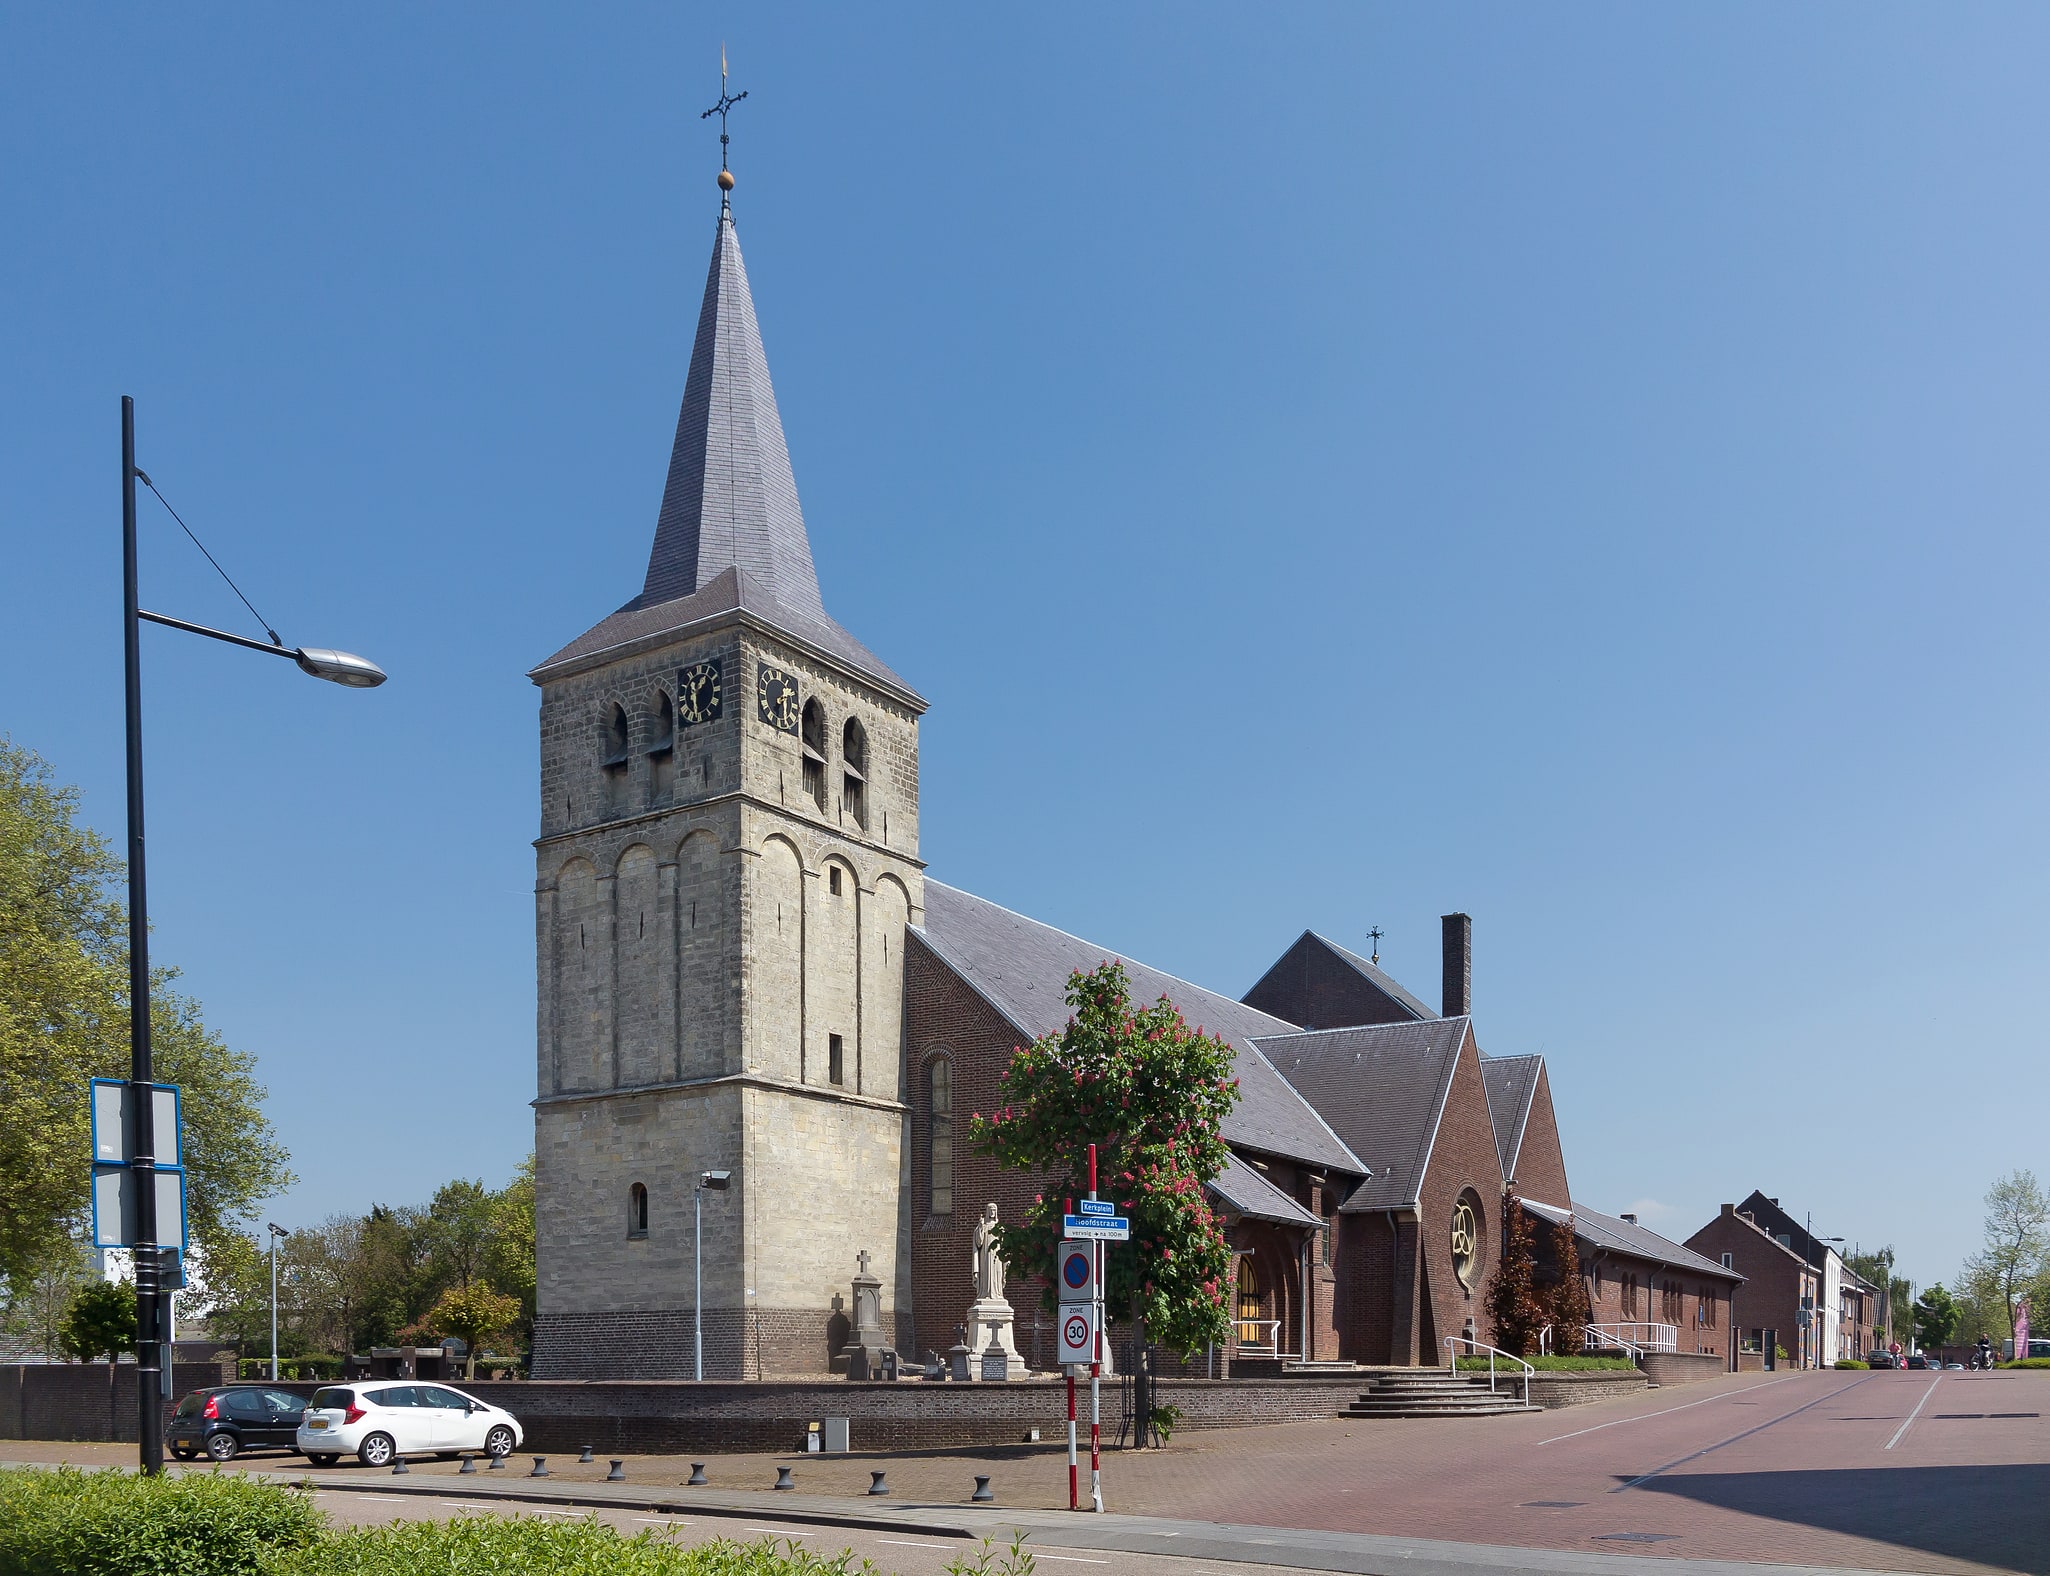 Maasbracht, Netherlands